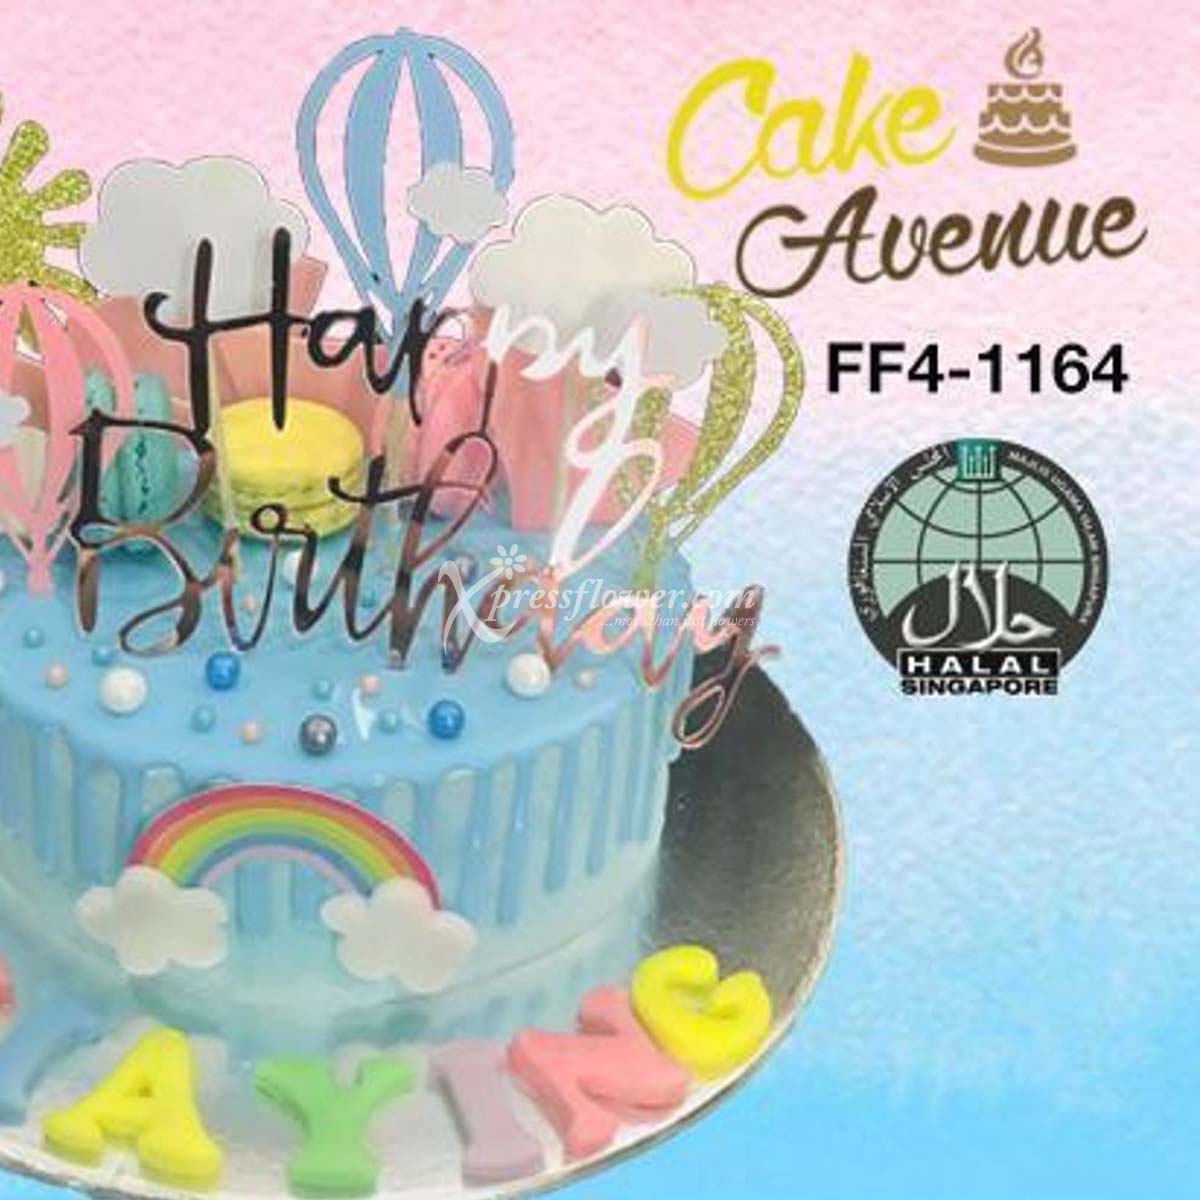 Happy Birthday - Hot Air Balloon Blue (Cake Avenue)